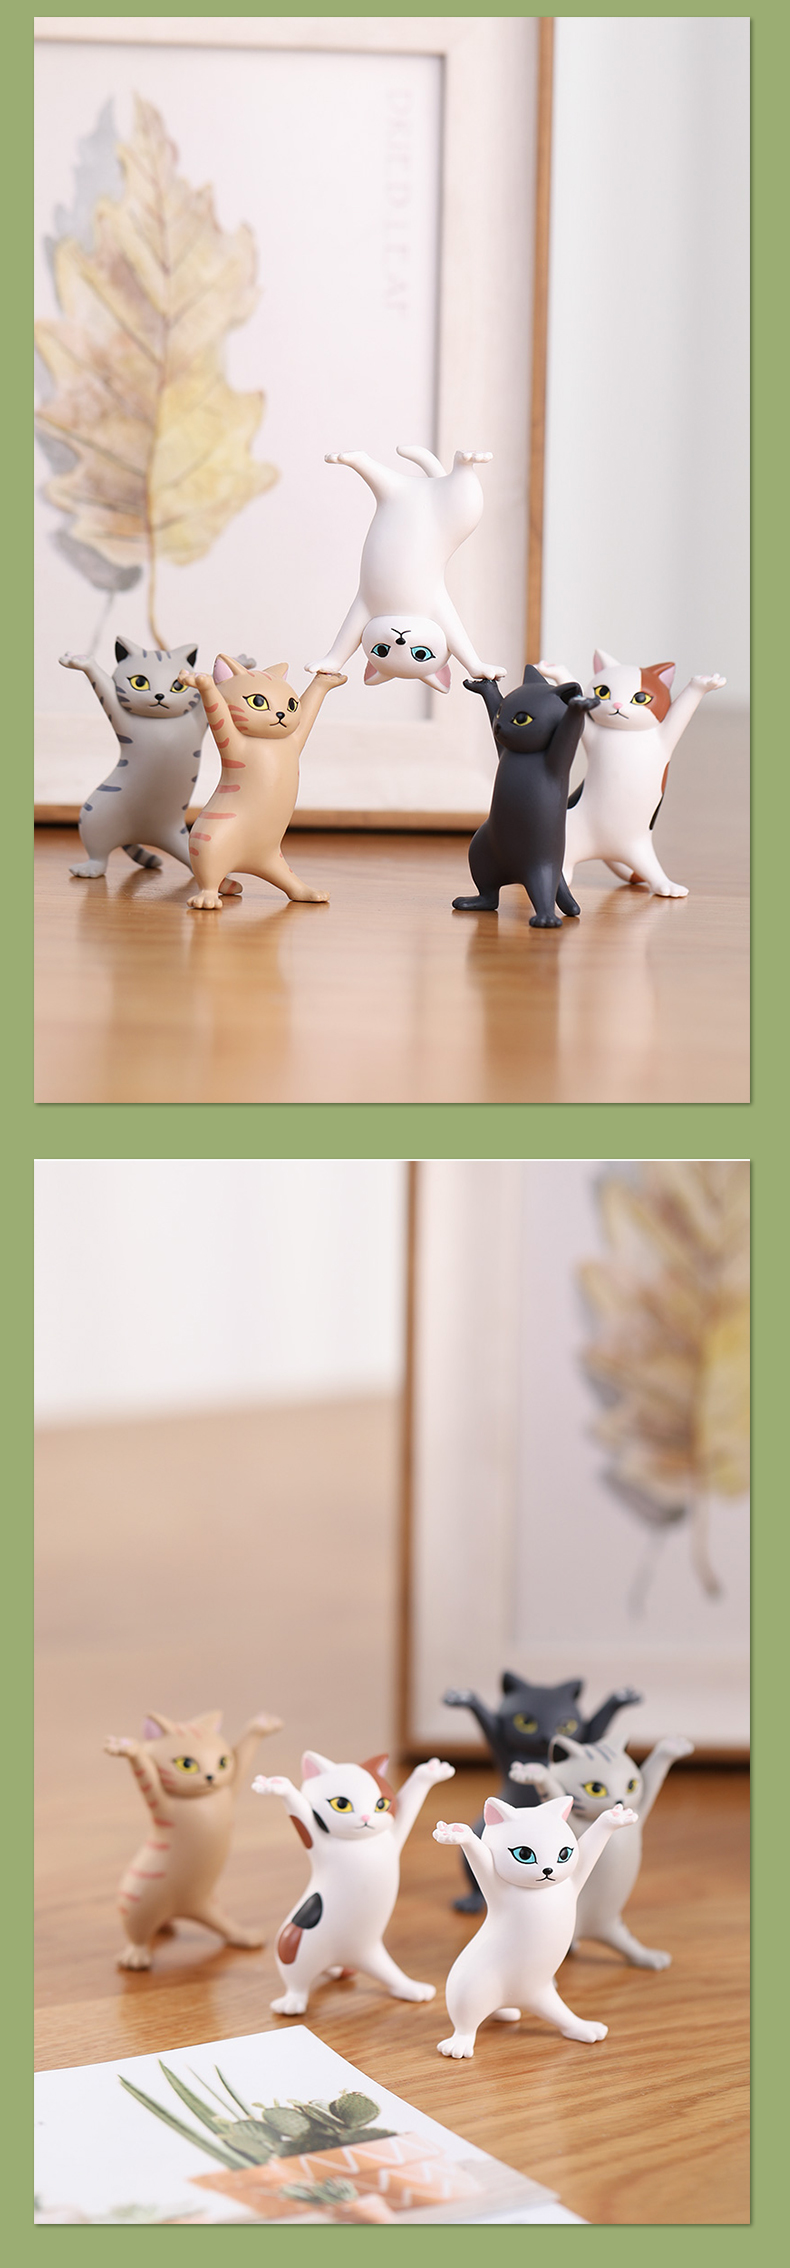 1-PC-Cartoon-Dancing-Cat-Figure-Doll-Figurines-Handmade-Enchanting-Kittens-Toy-for-Office-Pen-Holder-1838450-5